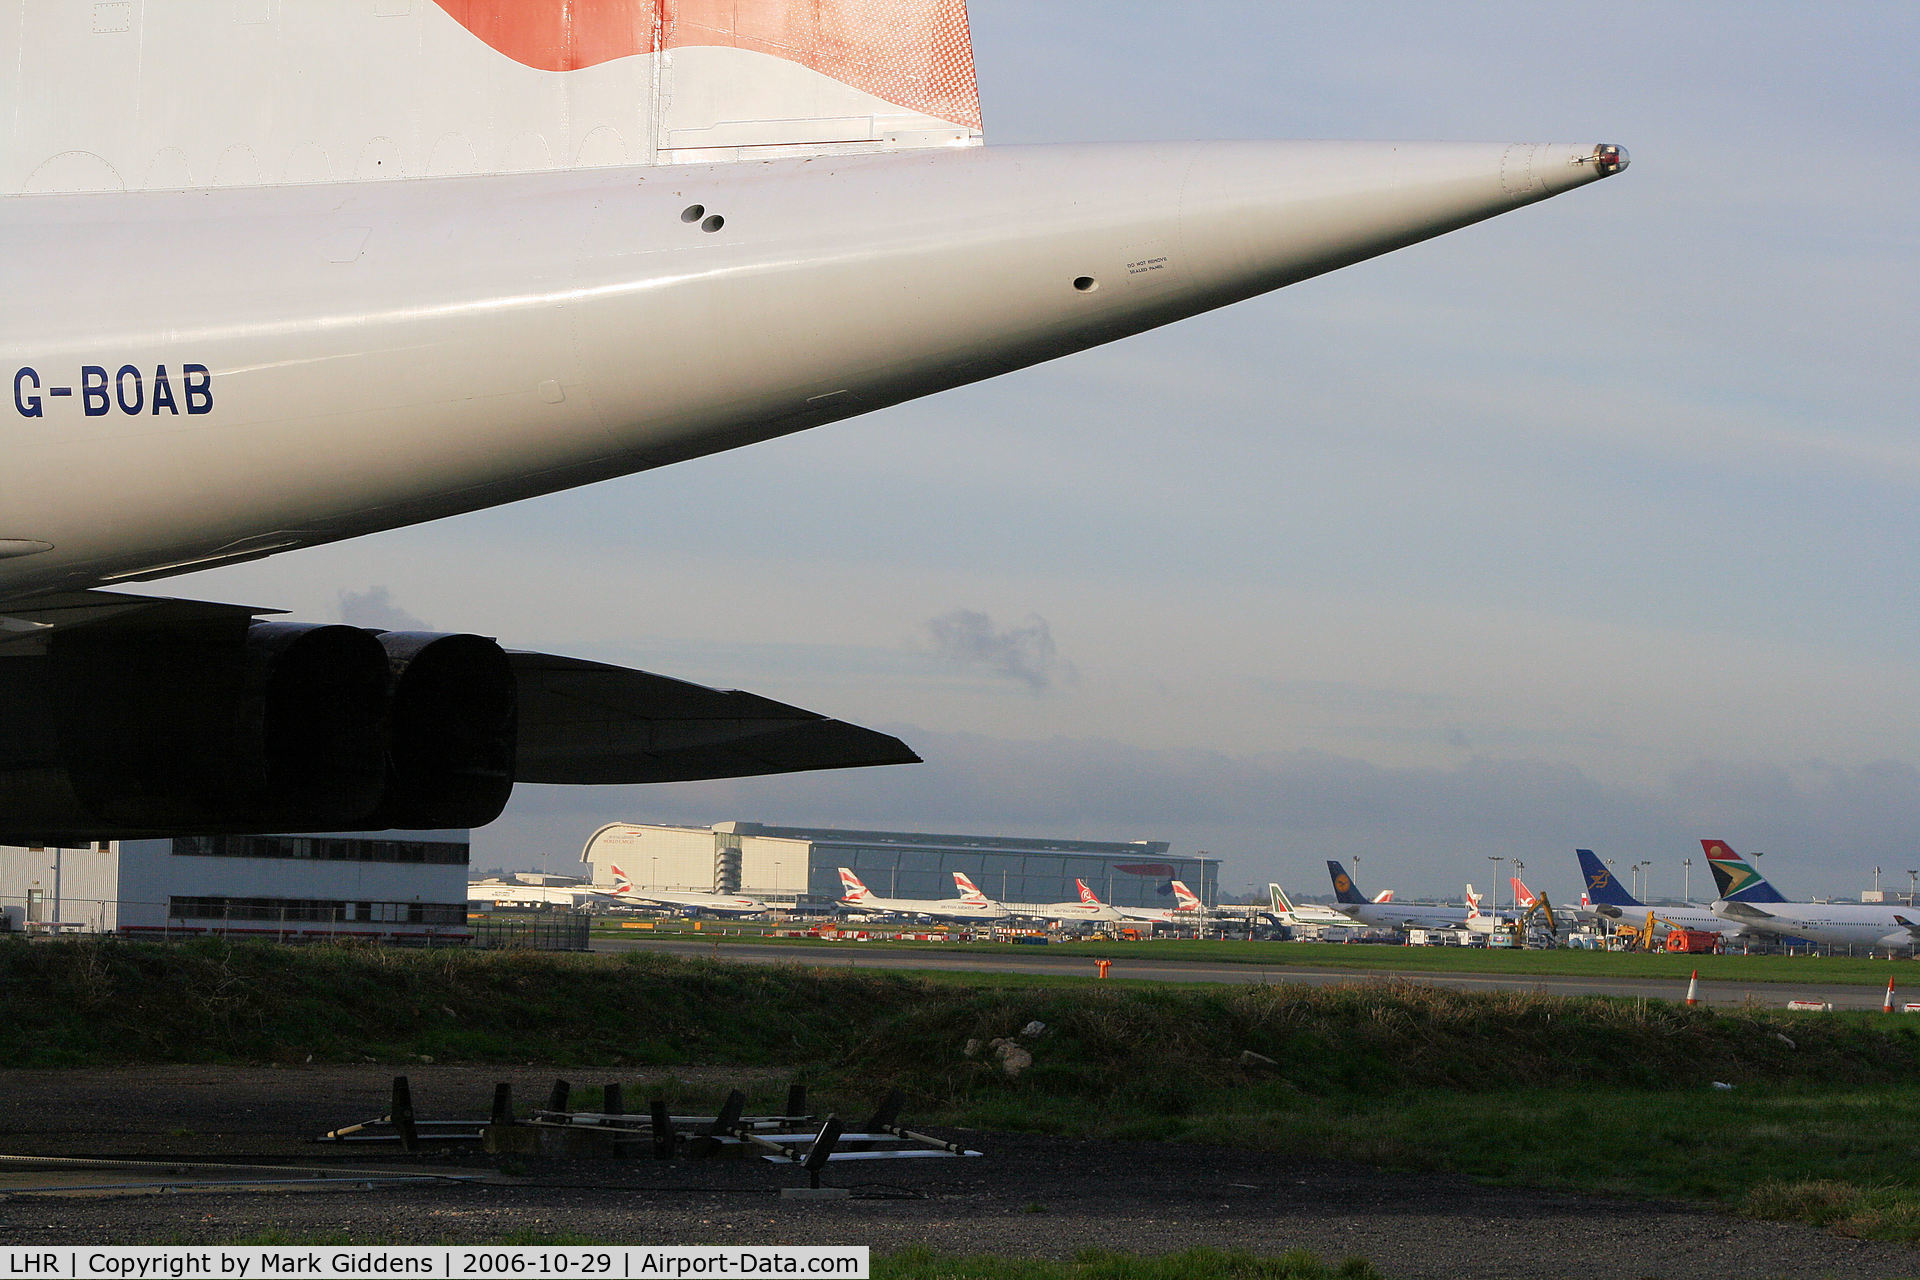 London Heathrow Airport, London, England United Kingdom (LHR) - BA World Cargo Centre seen under Concorde G-BOAB